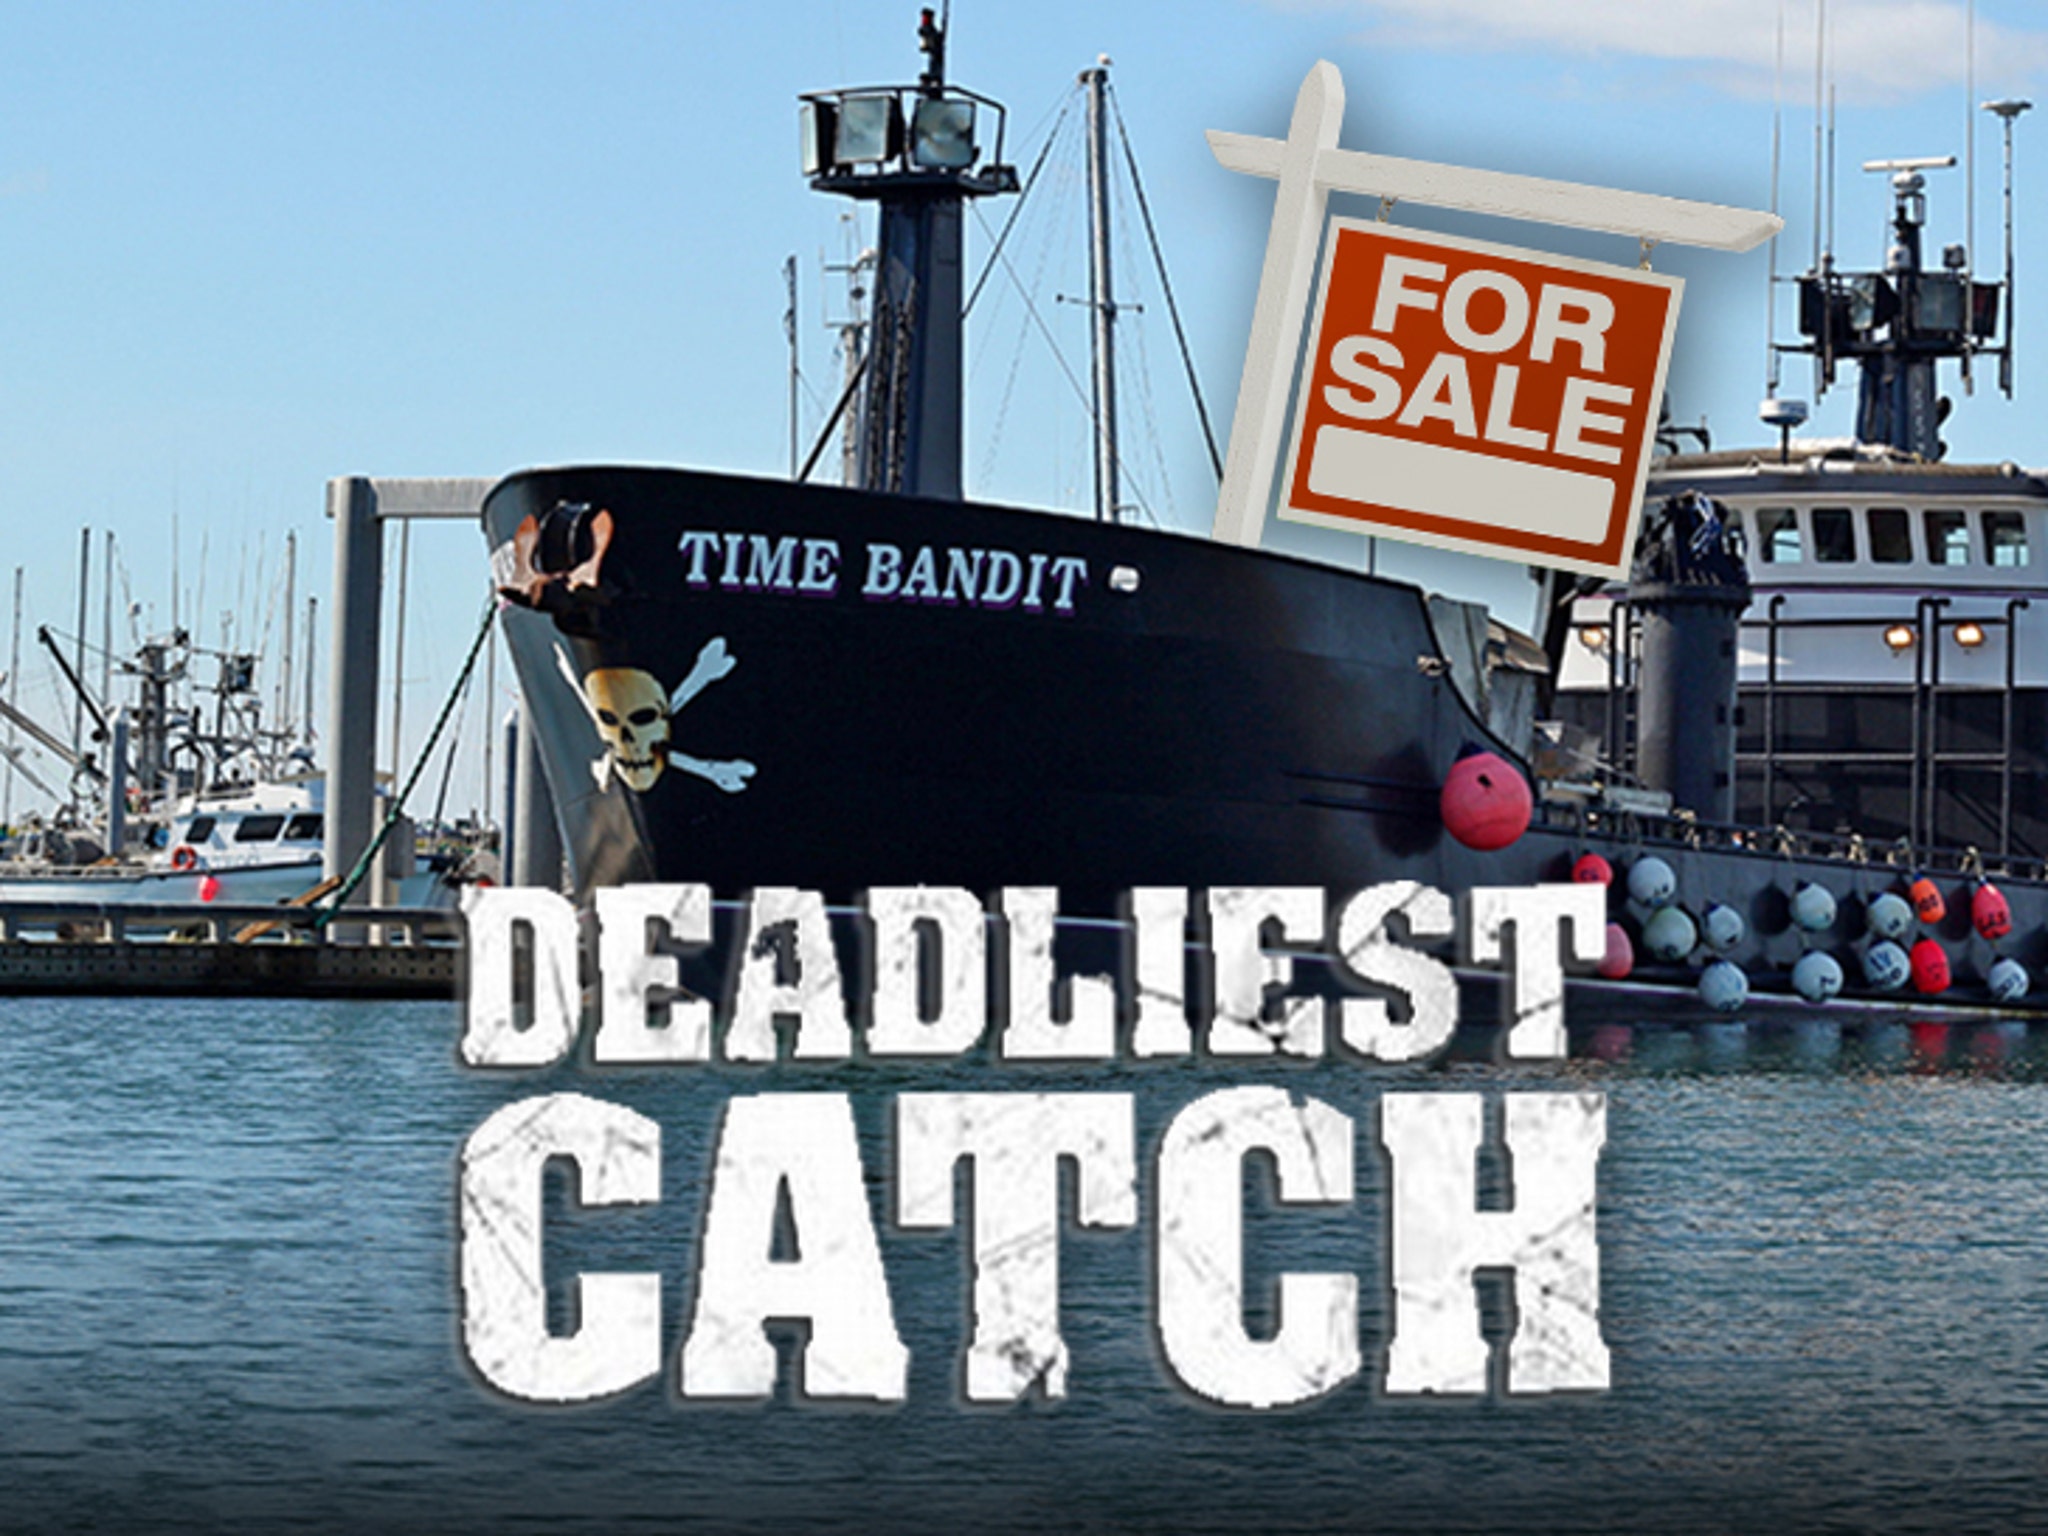 Deadliest Catch' Vessel Time Bandit for Sale at $2.88 Mil